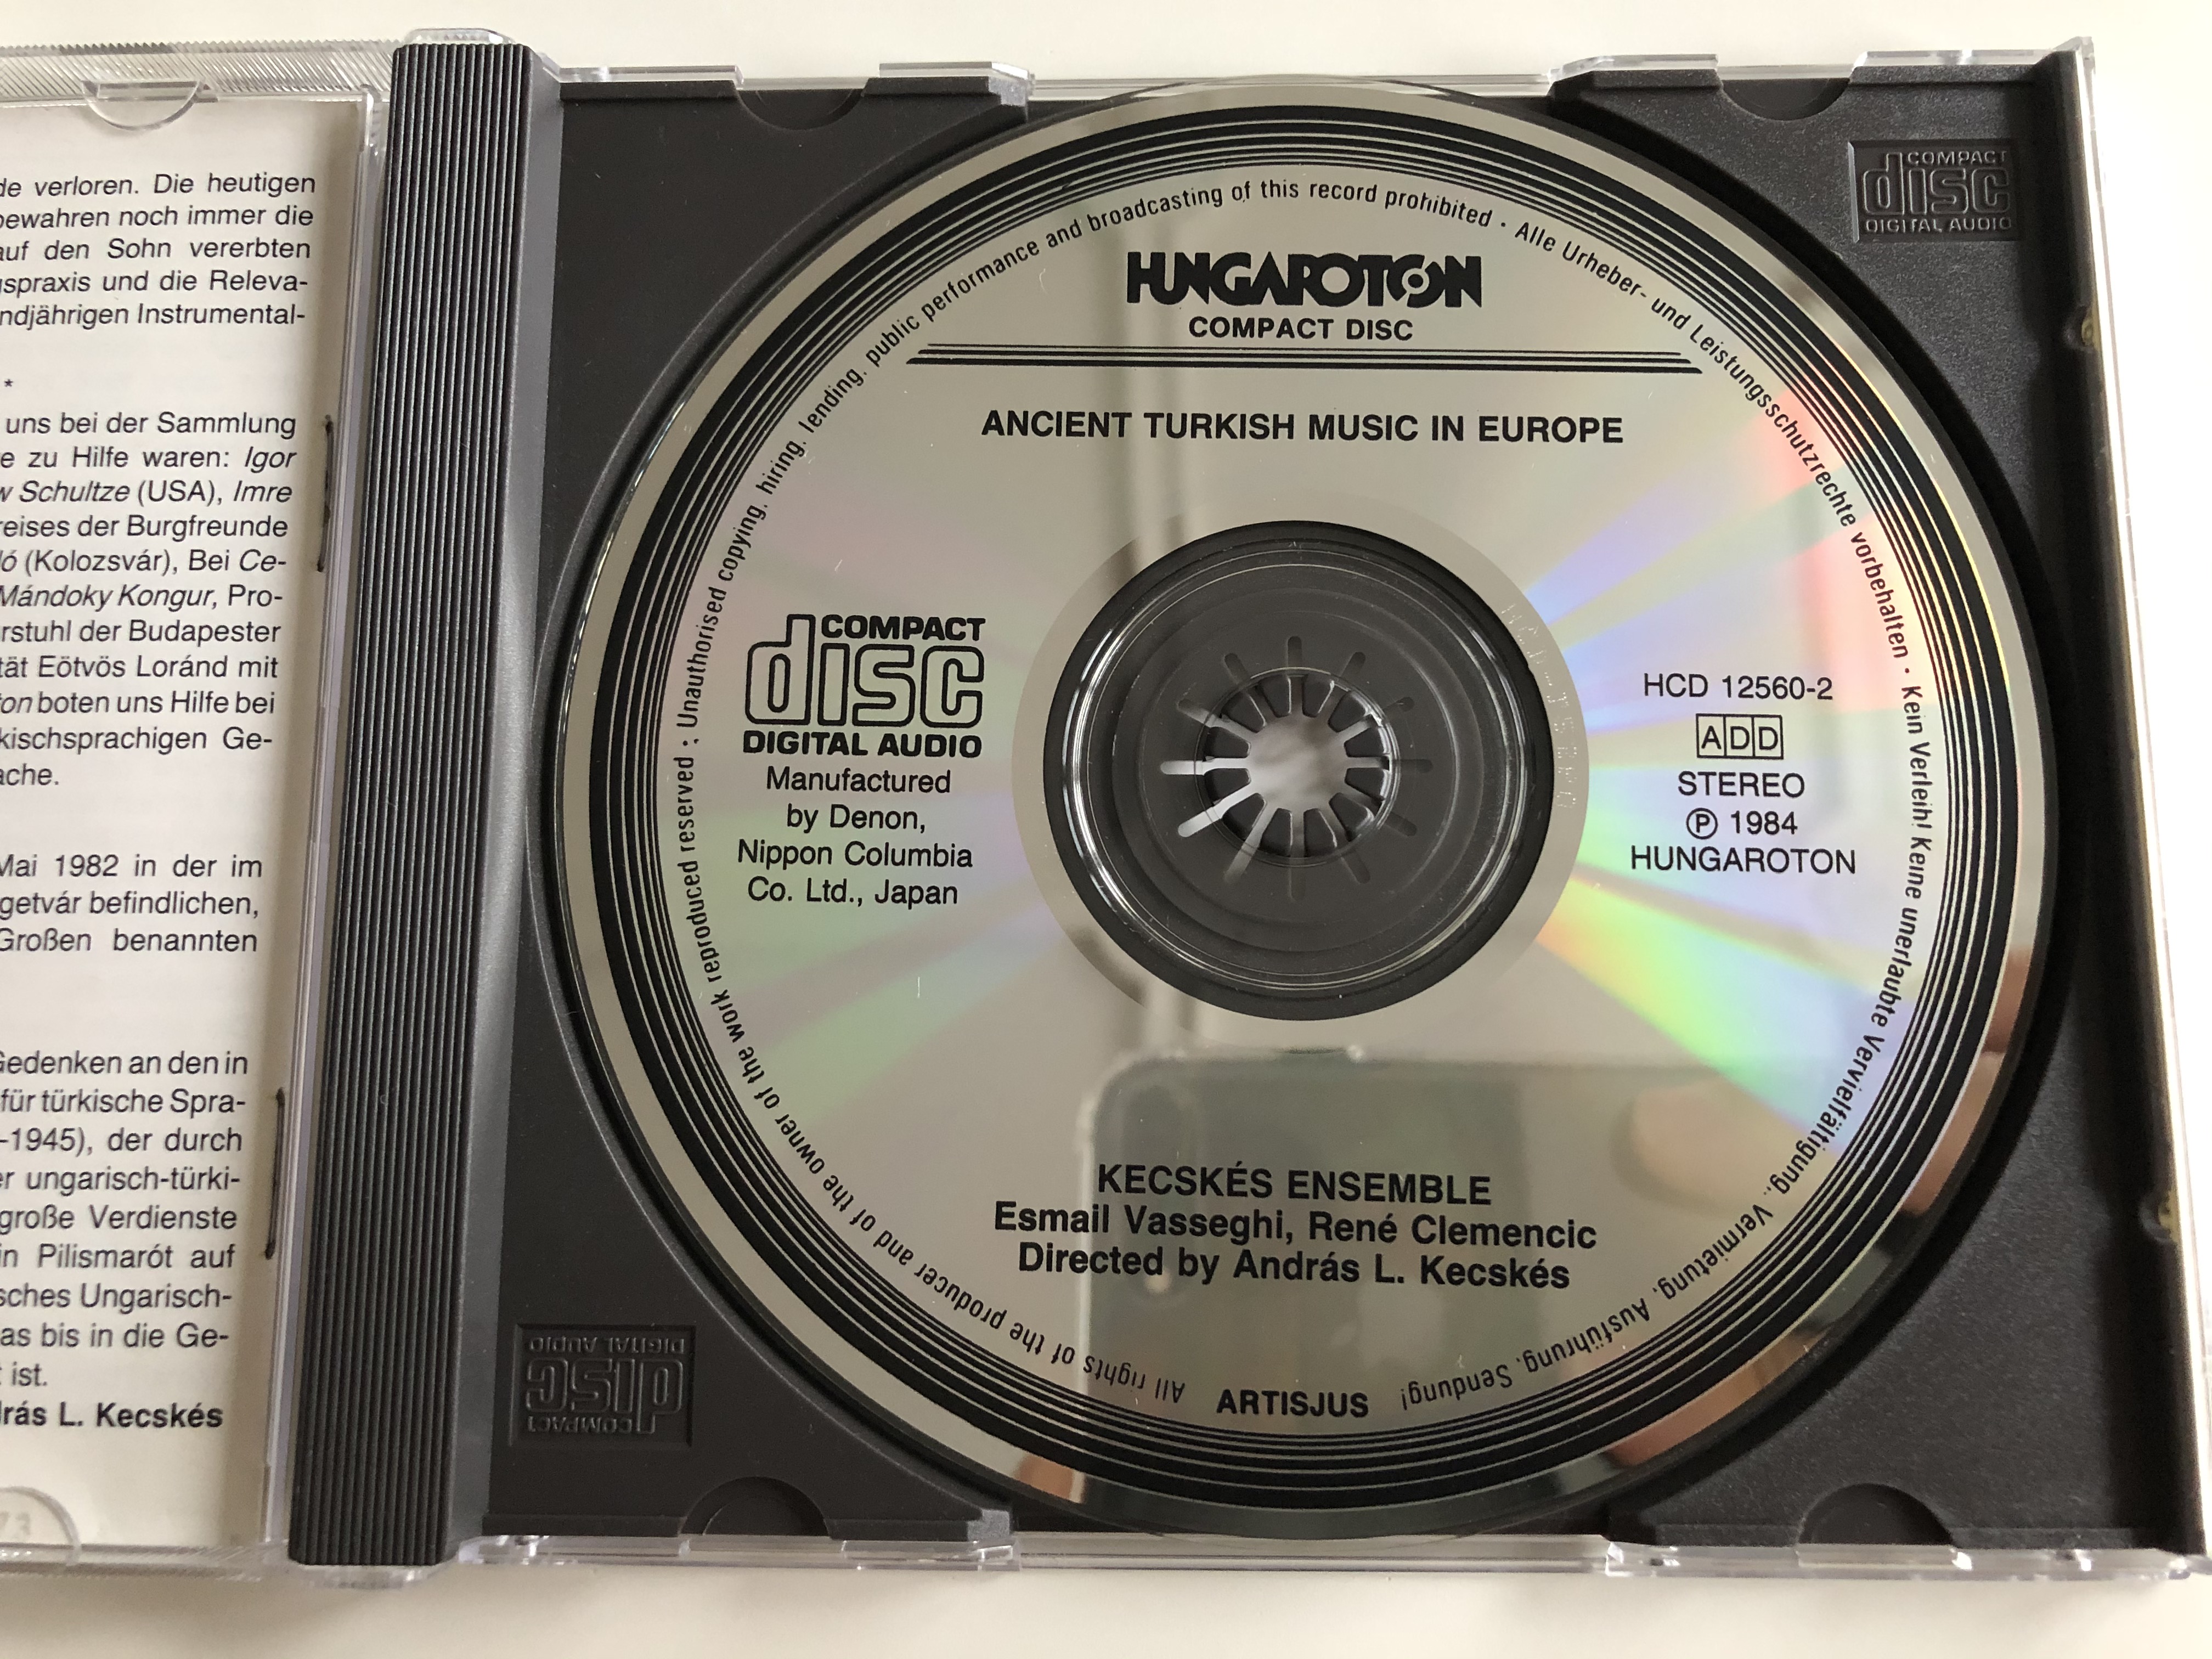 ancient-turkish-music-in-europe-kecsk-s-ensemble-hungaroton-audio-cd-1984-stereo-hcd-12560-2-8-.jpg